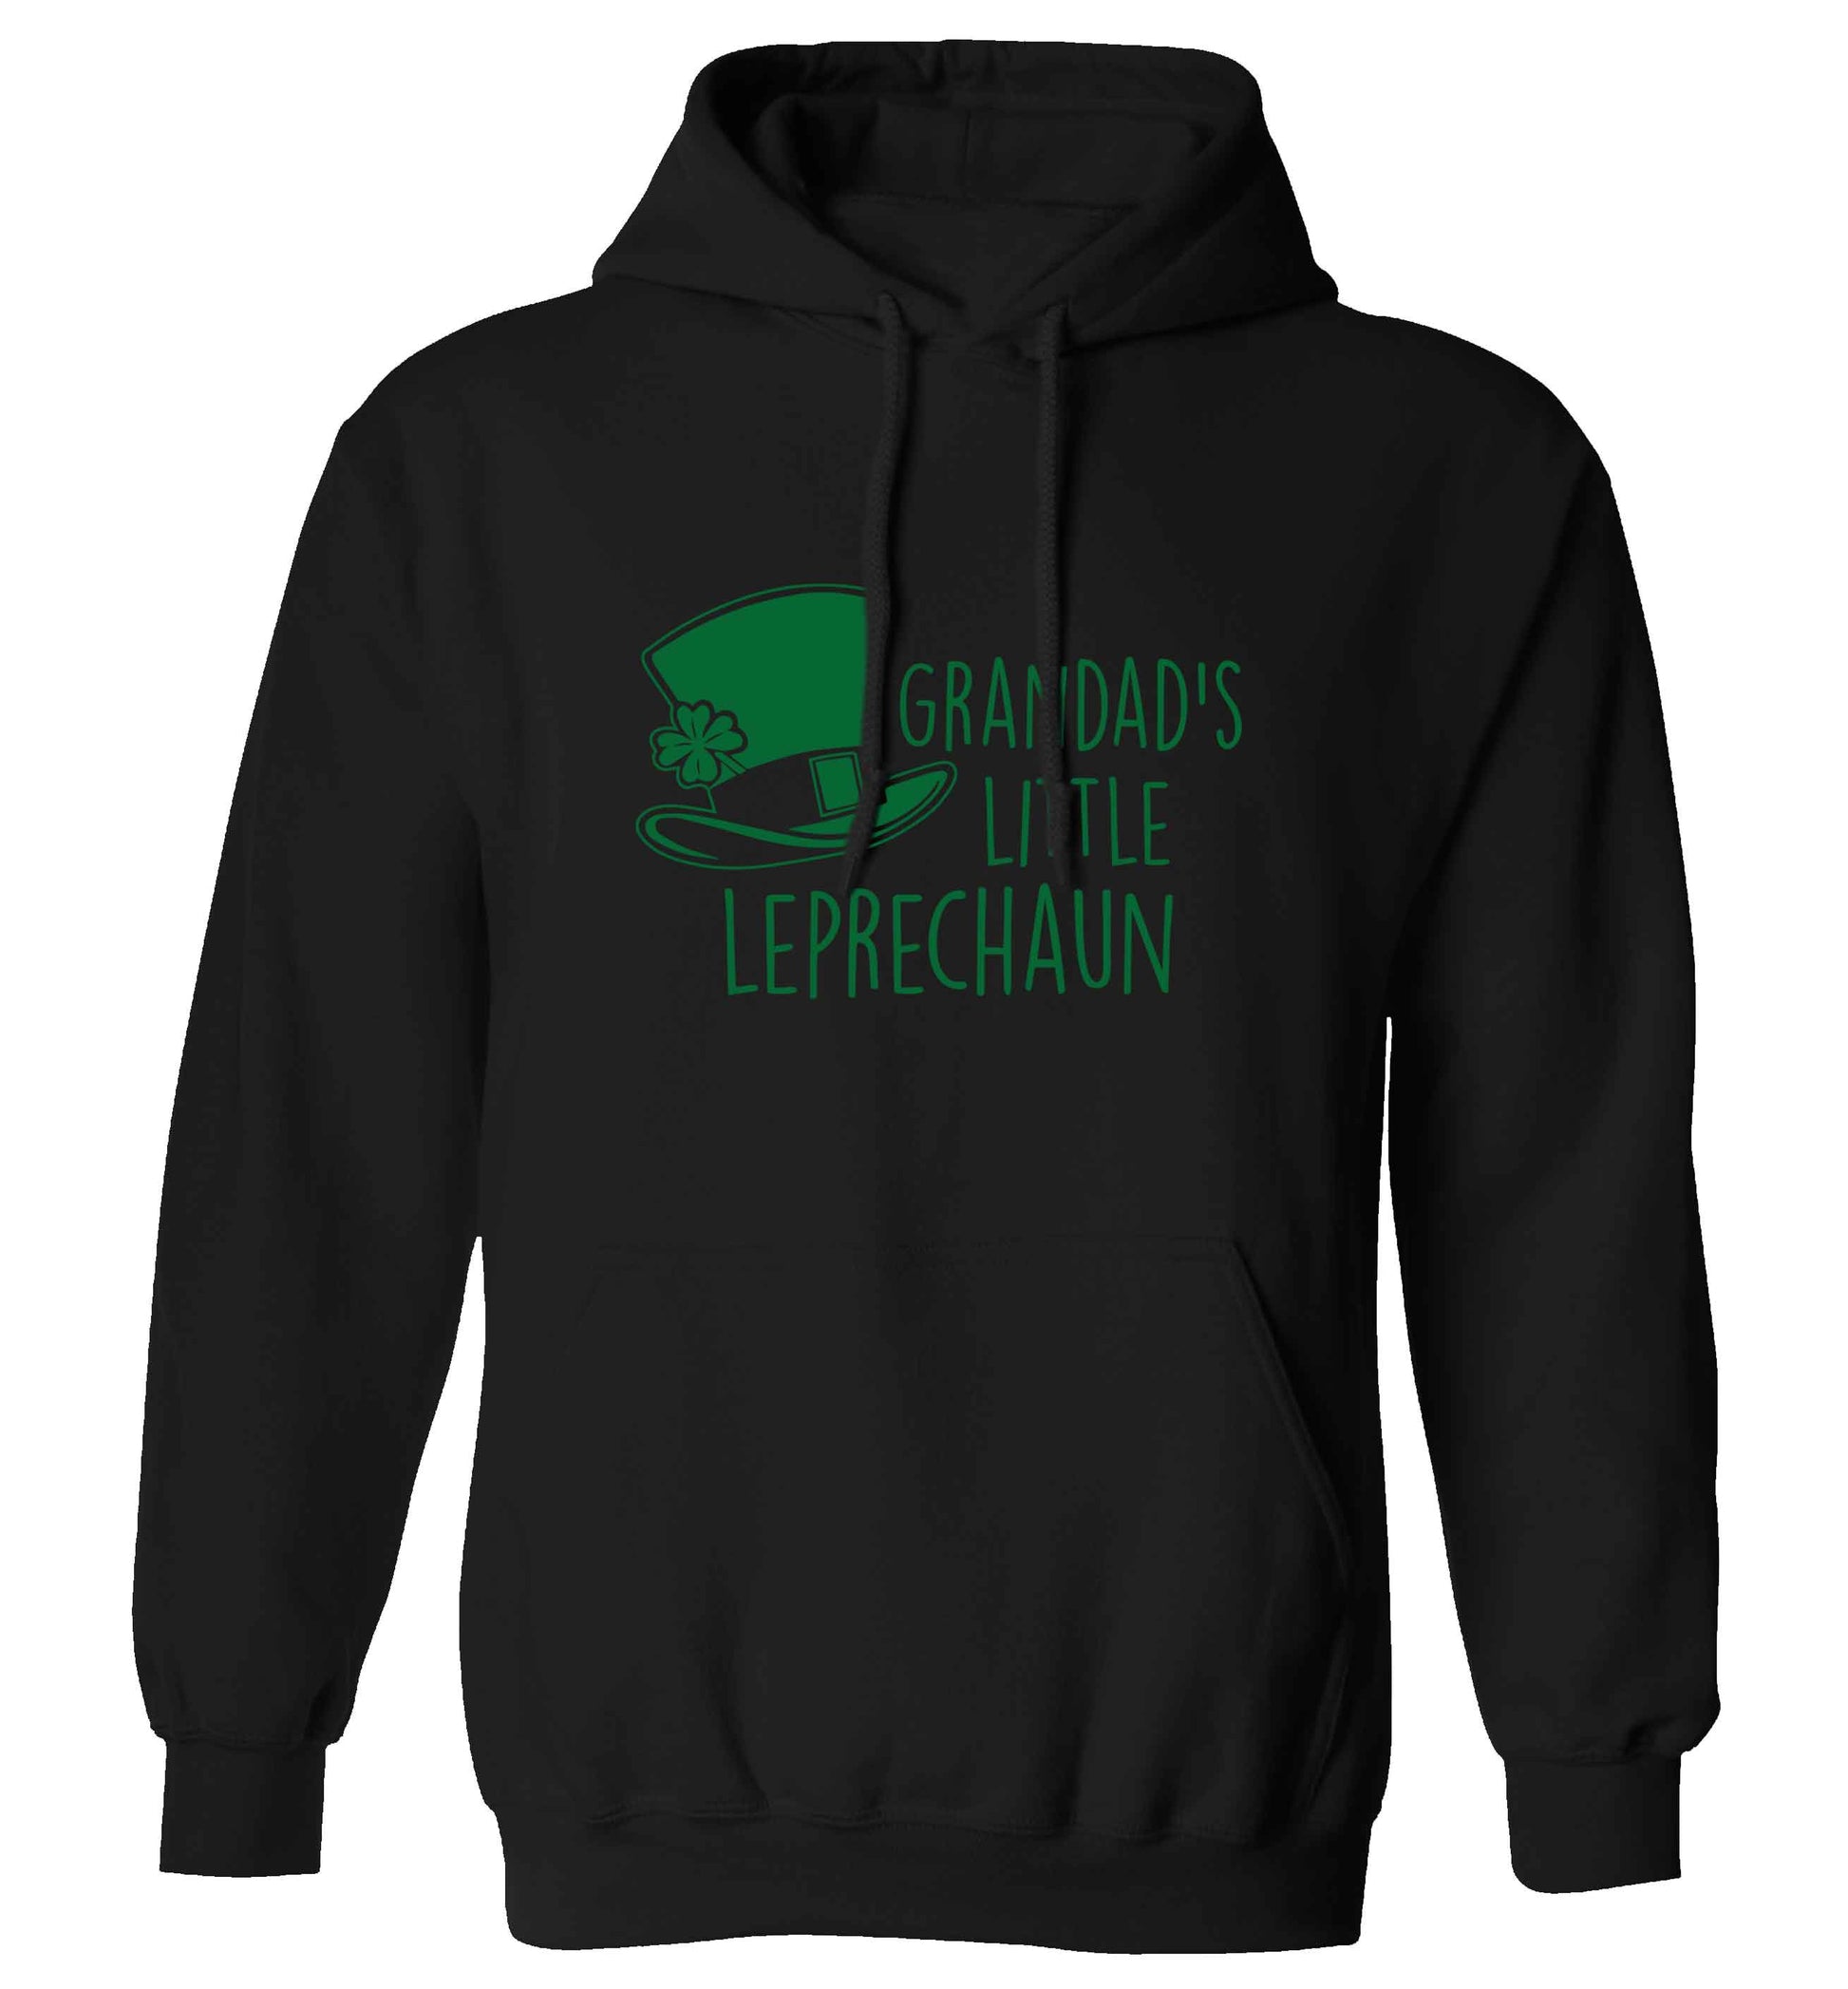 Grandad's little leprechaun adults unisex black hoodie 2XL